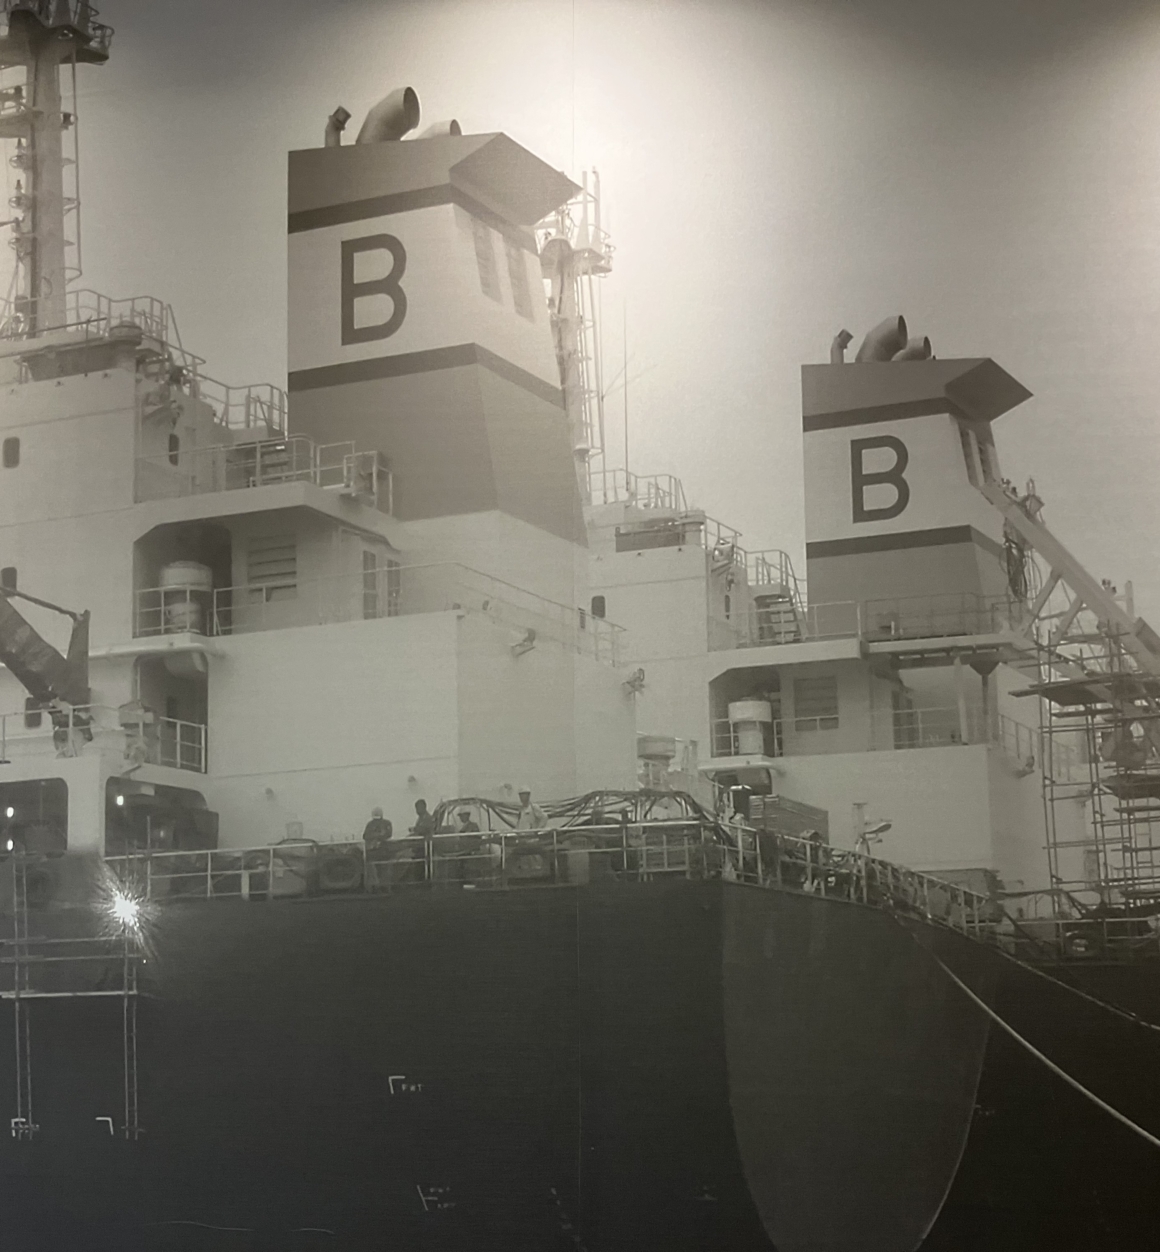 Blystad Group historic photo of shipping boats